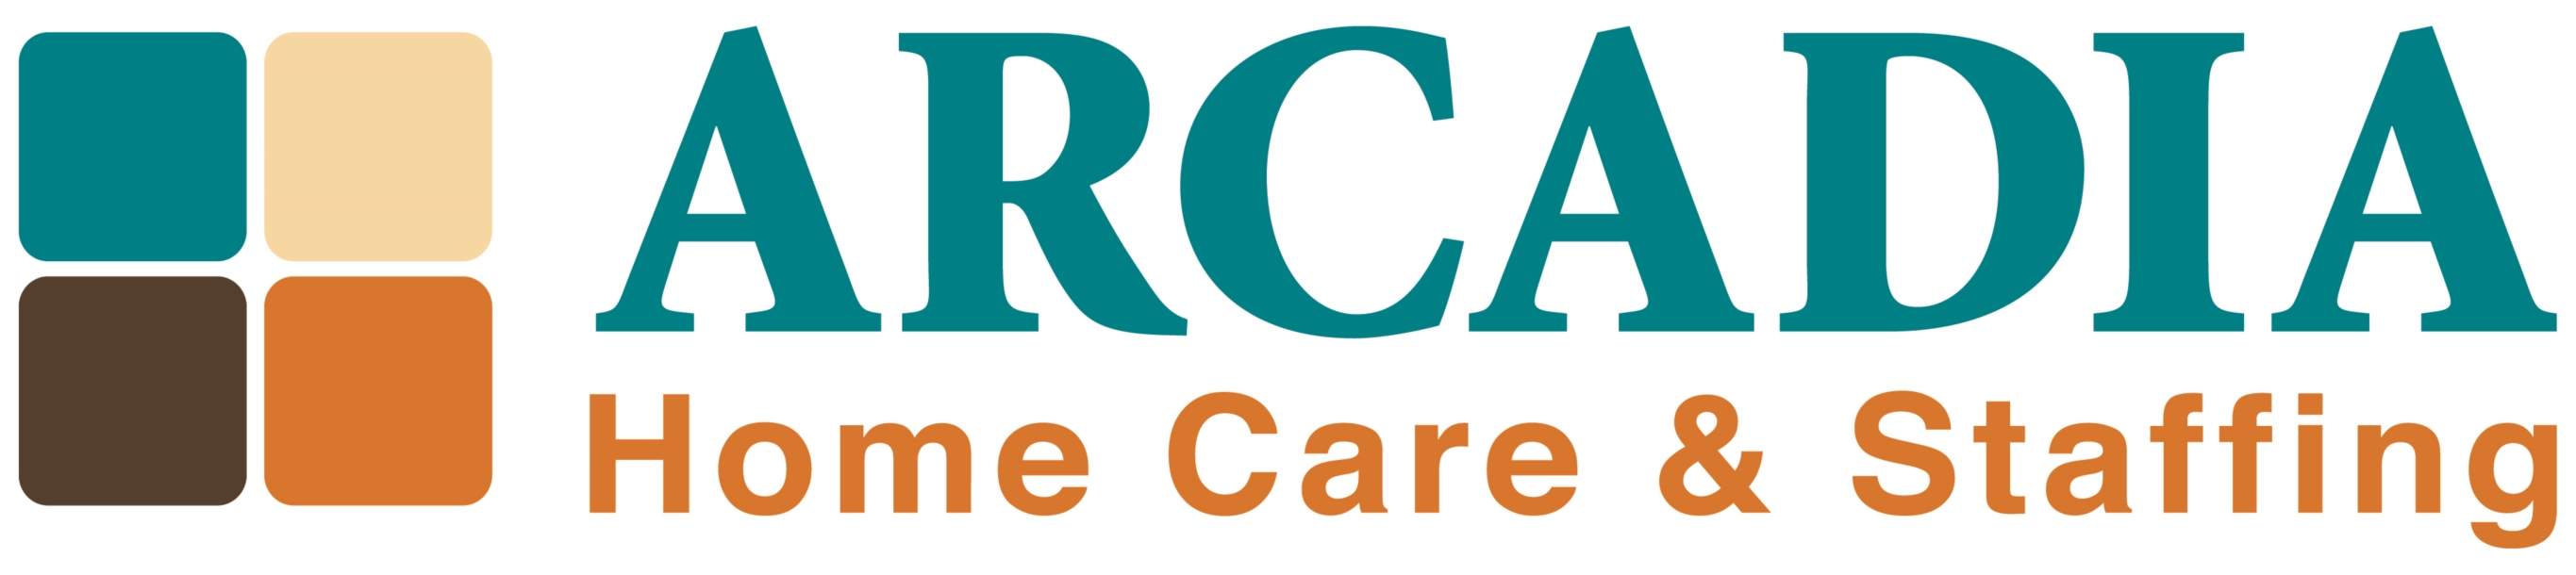 Arcadia Home Care & Staffing Company Logo